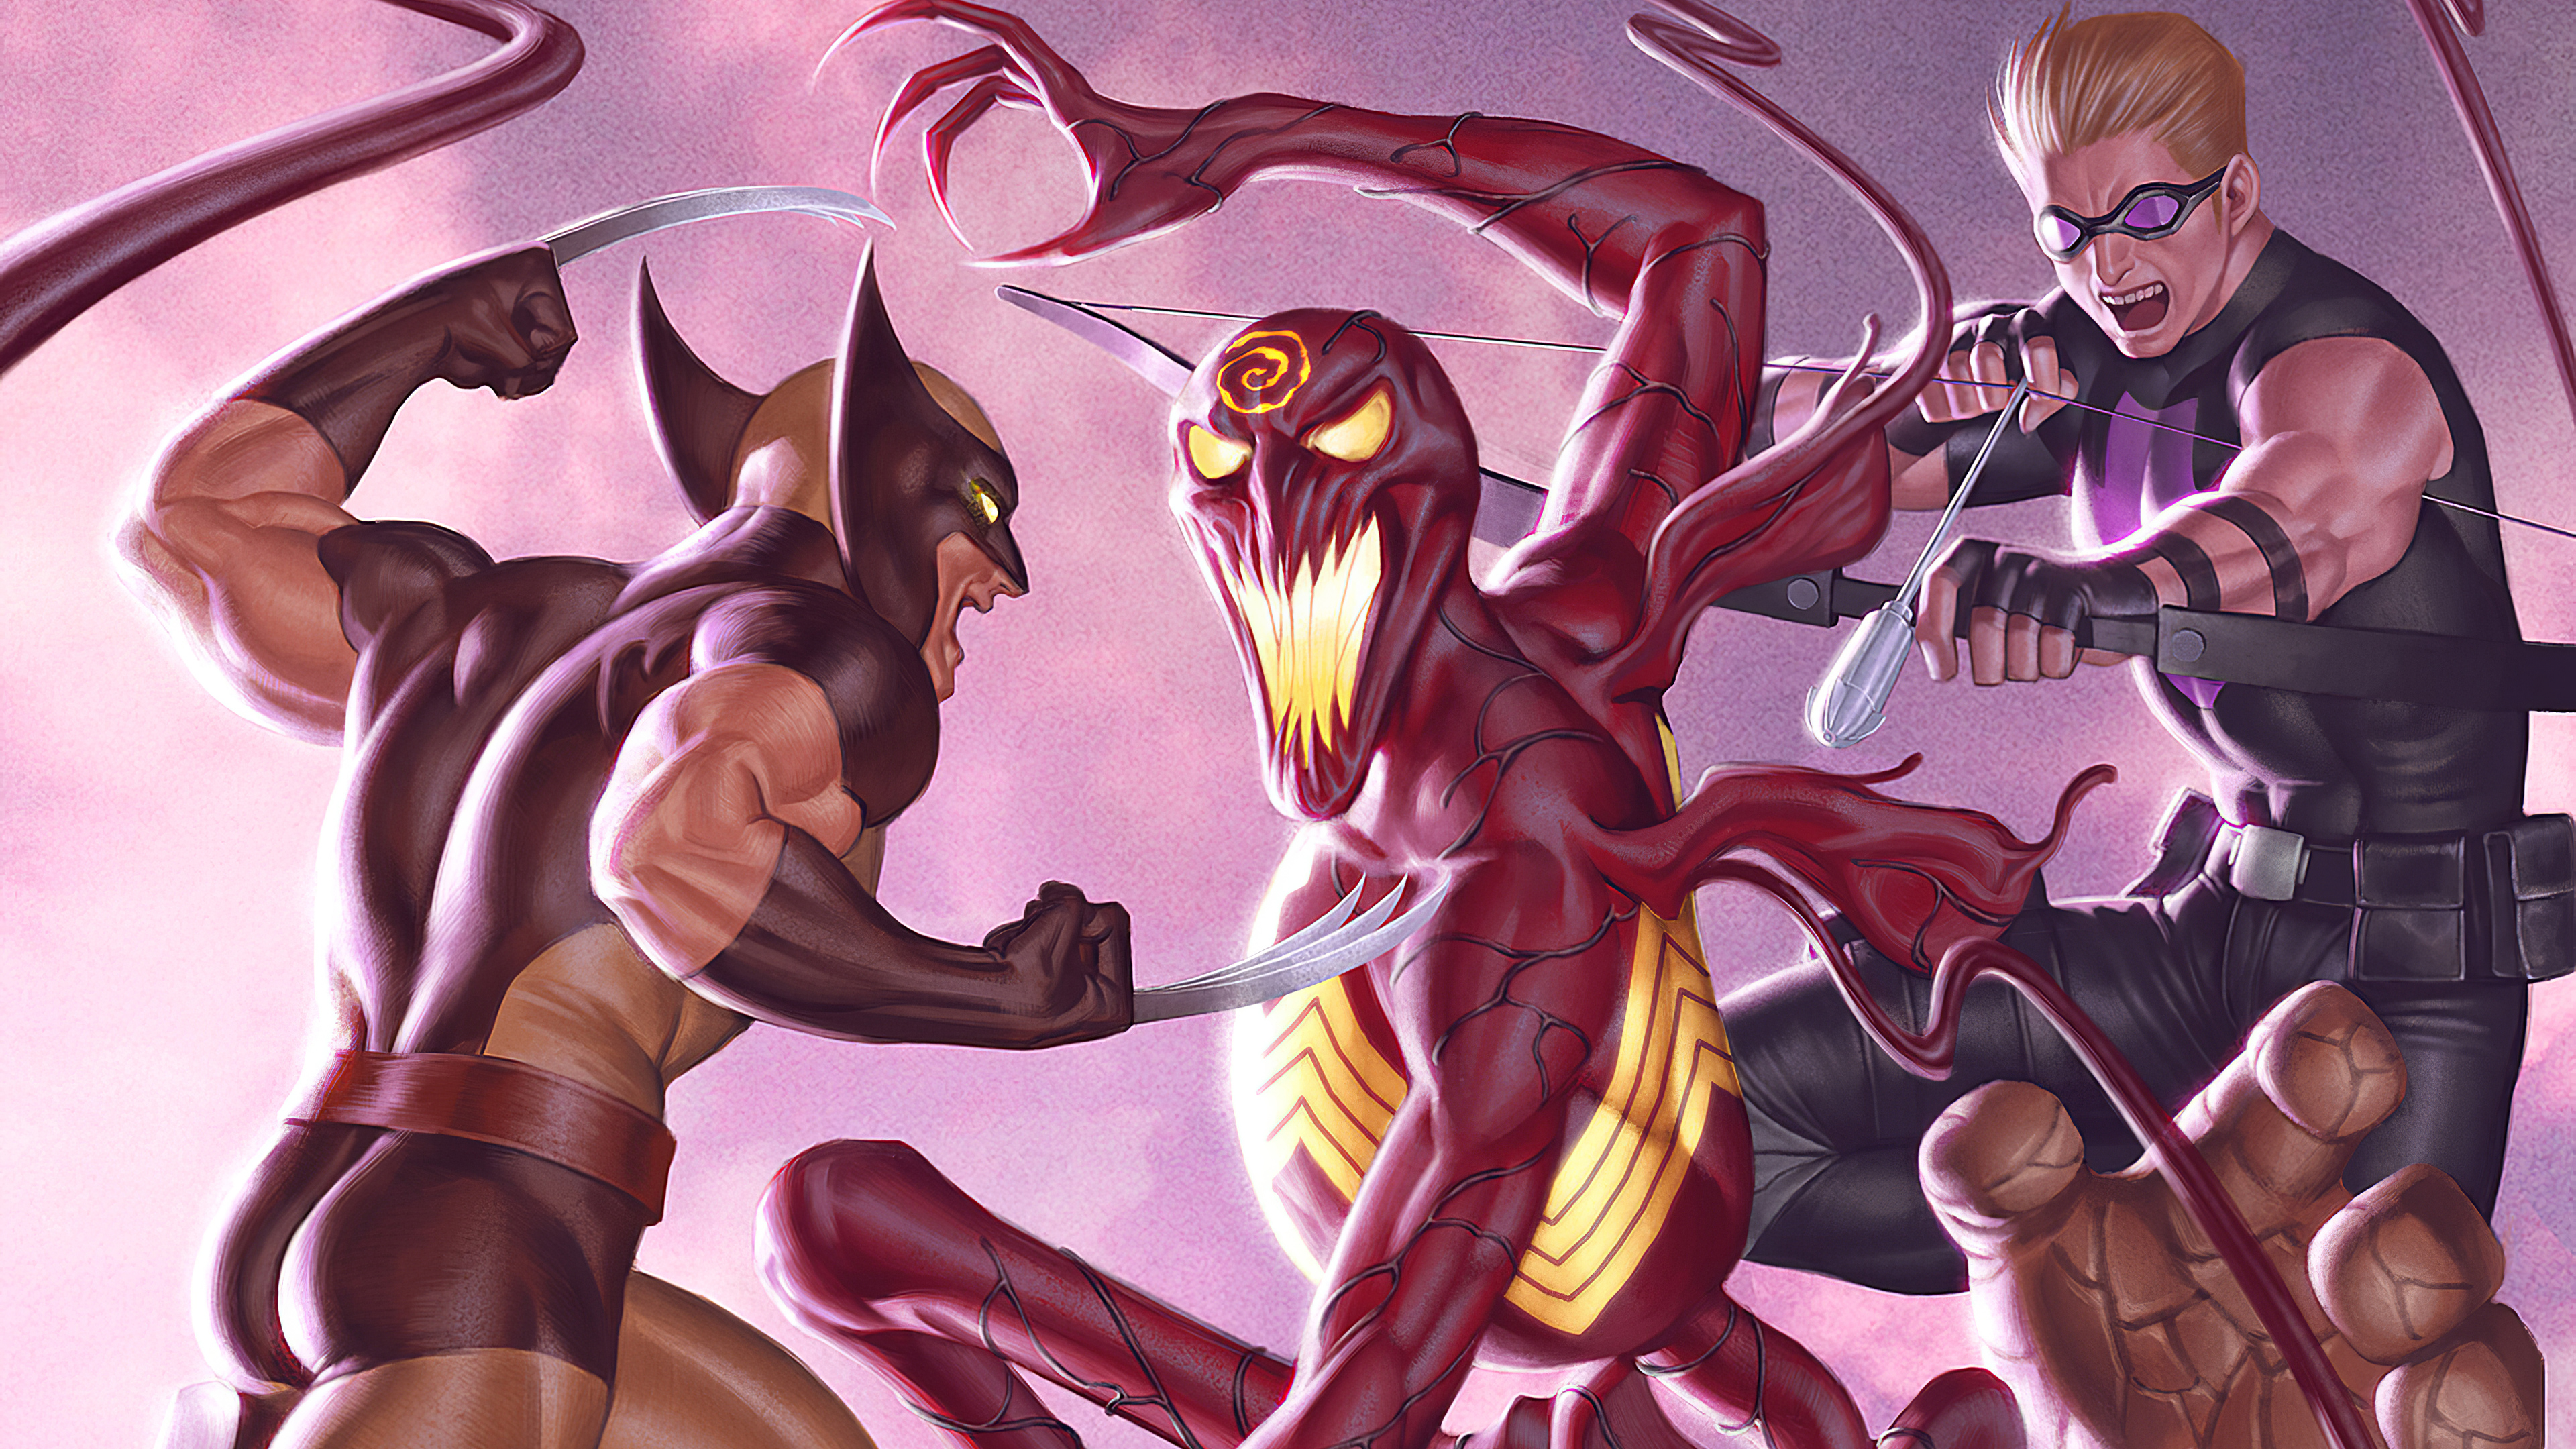 Marvel Absolute Carnage wolverine wallpapers, superheroes wallpapers